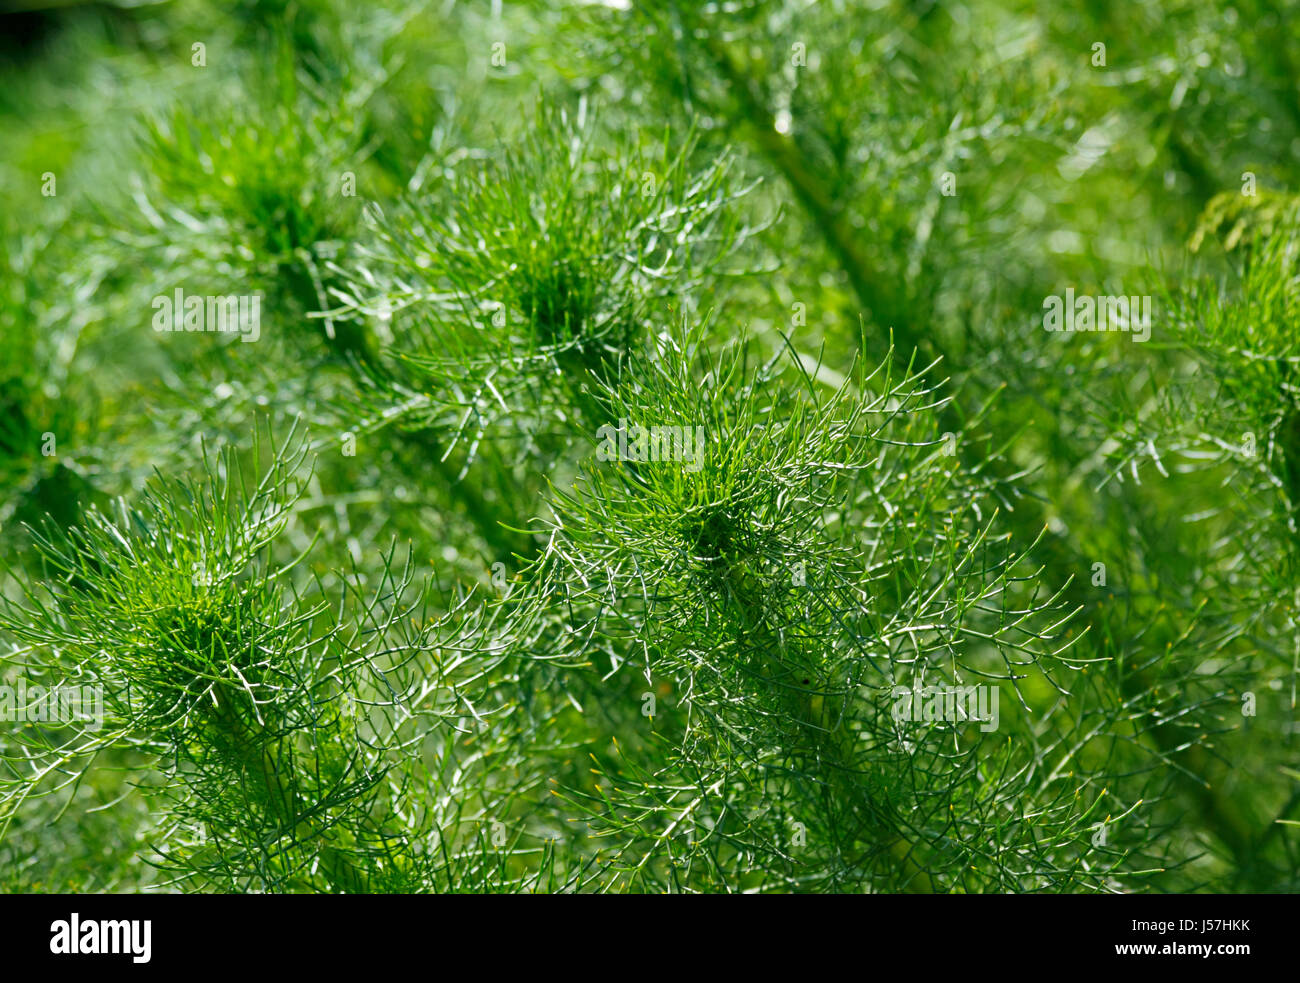 Piante verdi sfondo. Close-up. Telaio obliquo. Foto Stock